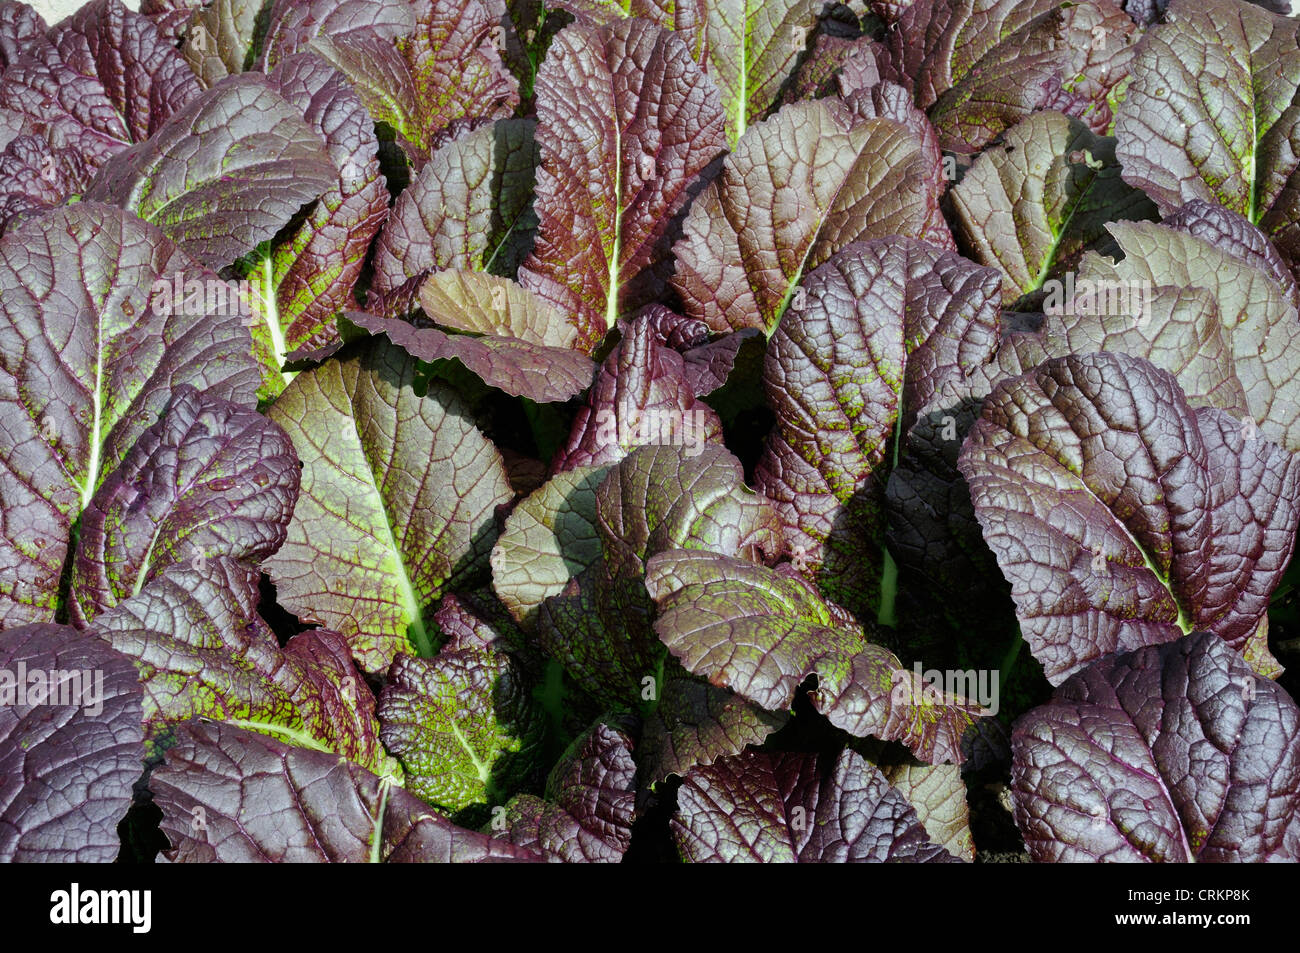 Brassica rapa rubra, Pak choi Stock Photo